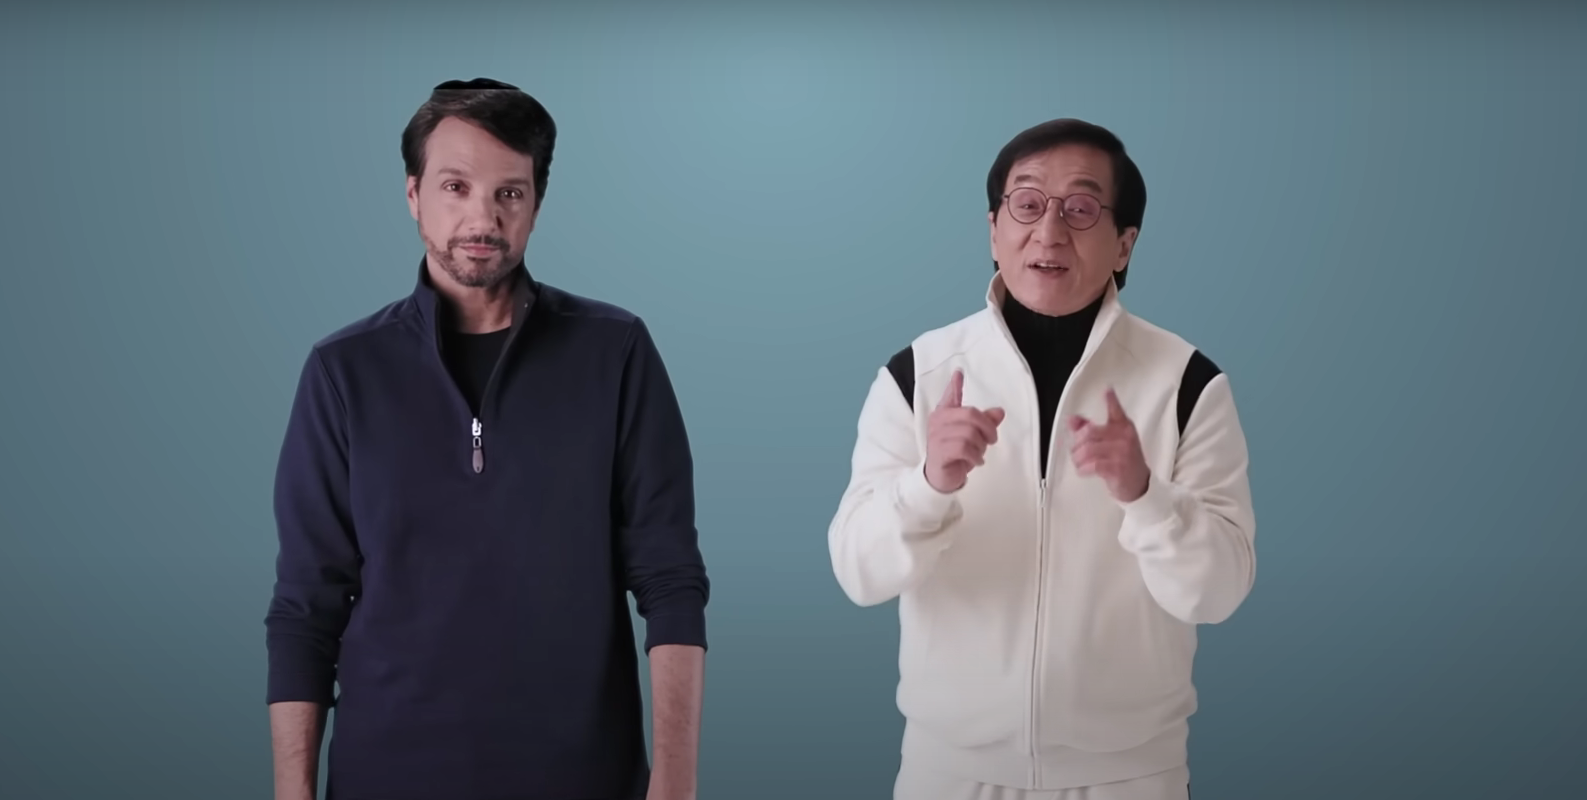 Karate Kid announcement, starring Jackie Chan (Mr. Han) and Ralph Macchio (Daniel LaRusso) 